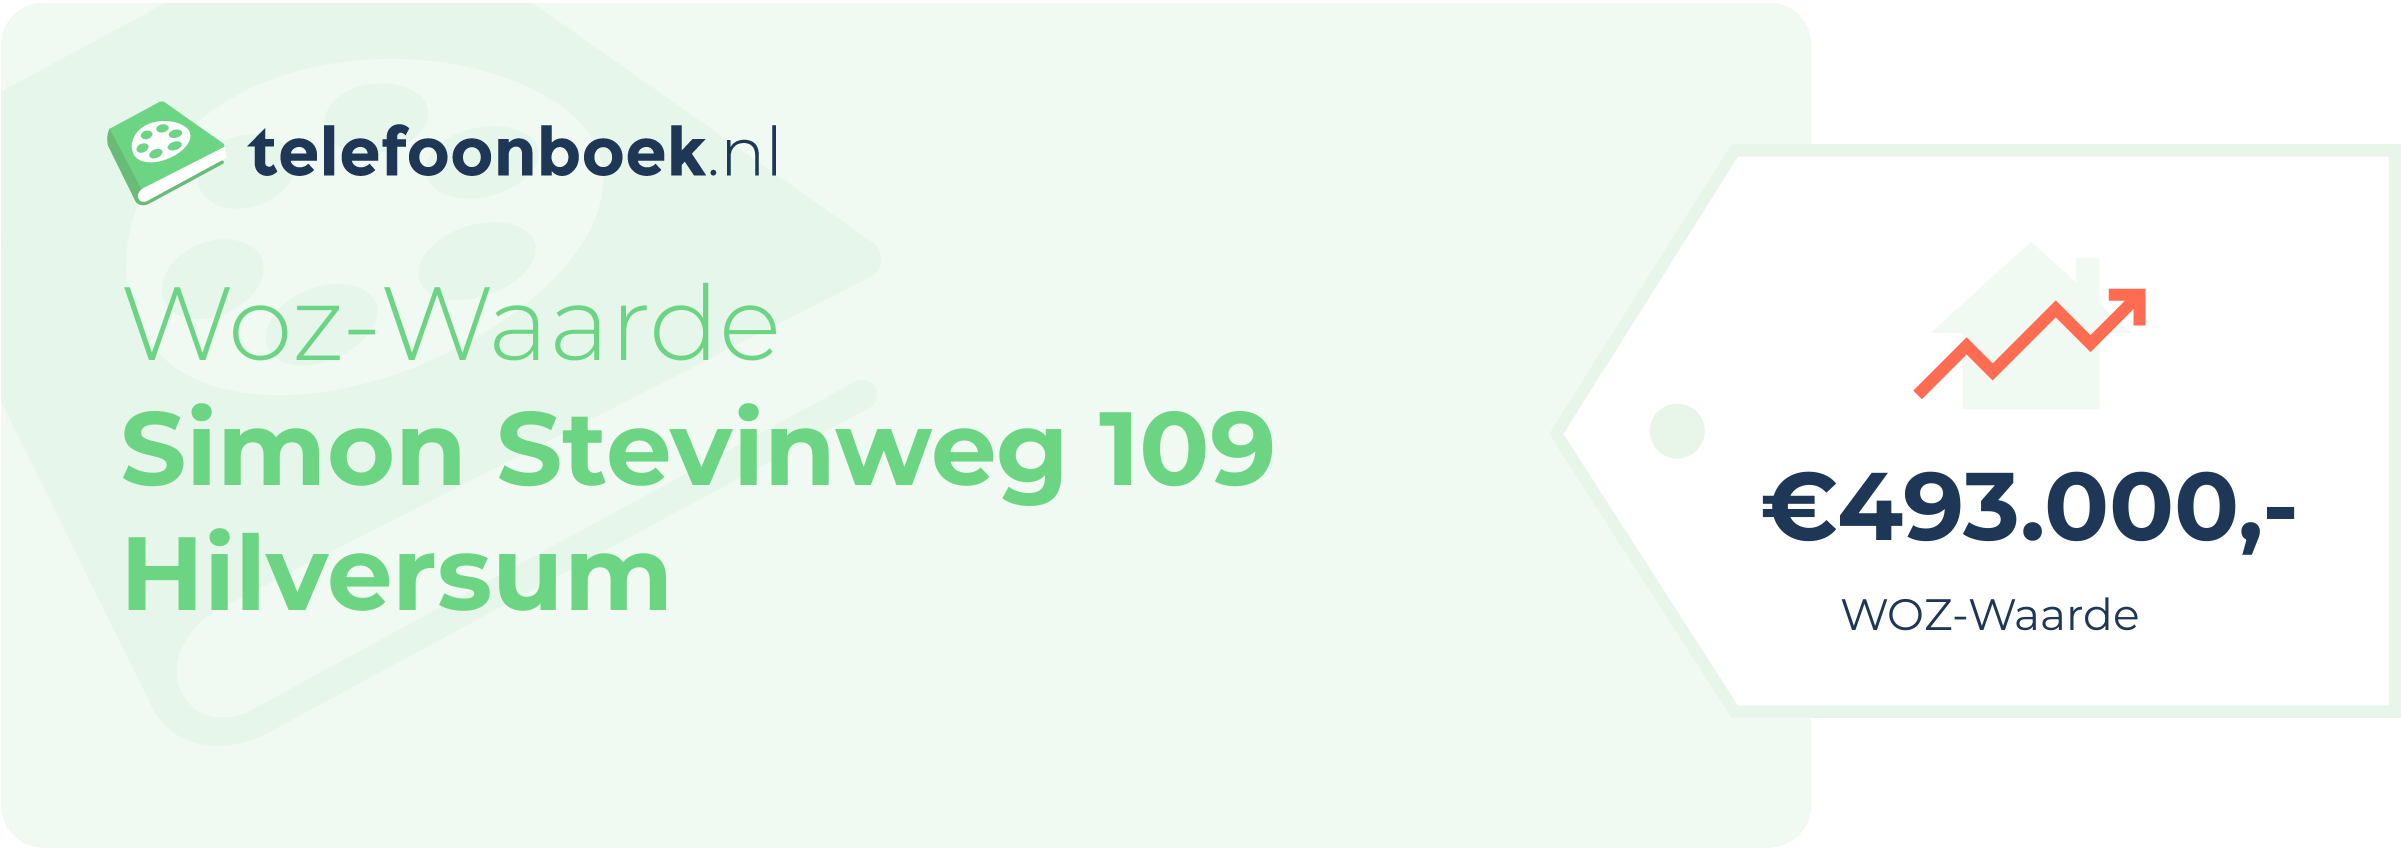 WOZ-waarde Simon Stevinweg 109 Hilversum